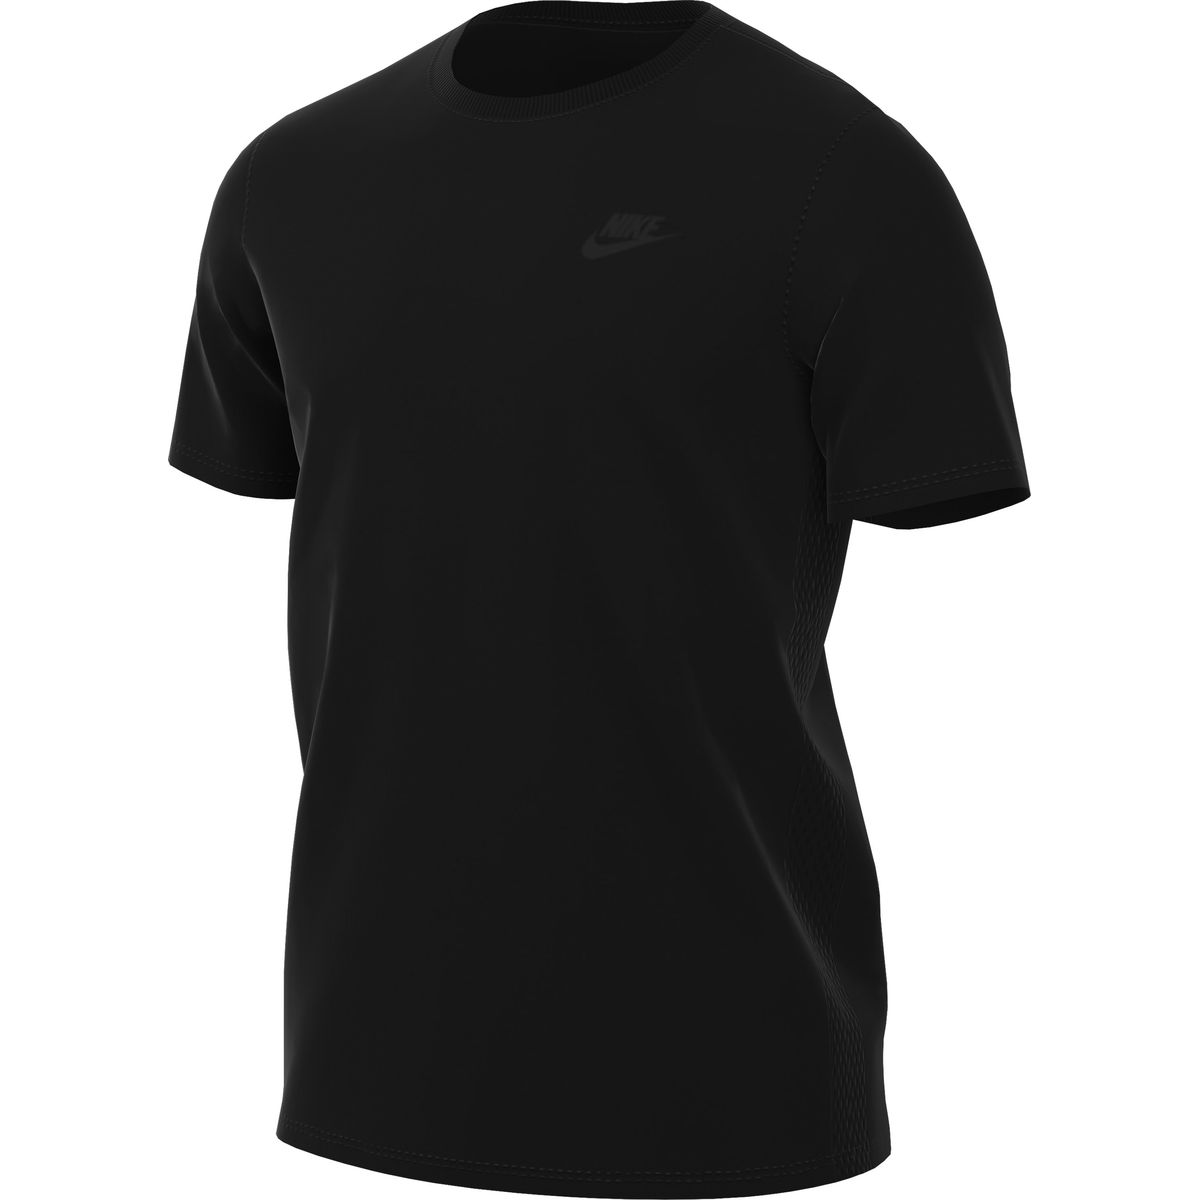 Nike Sportswear Lightweight Top Herren T-Shirt